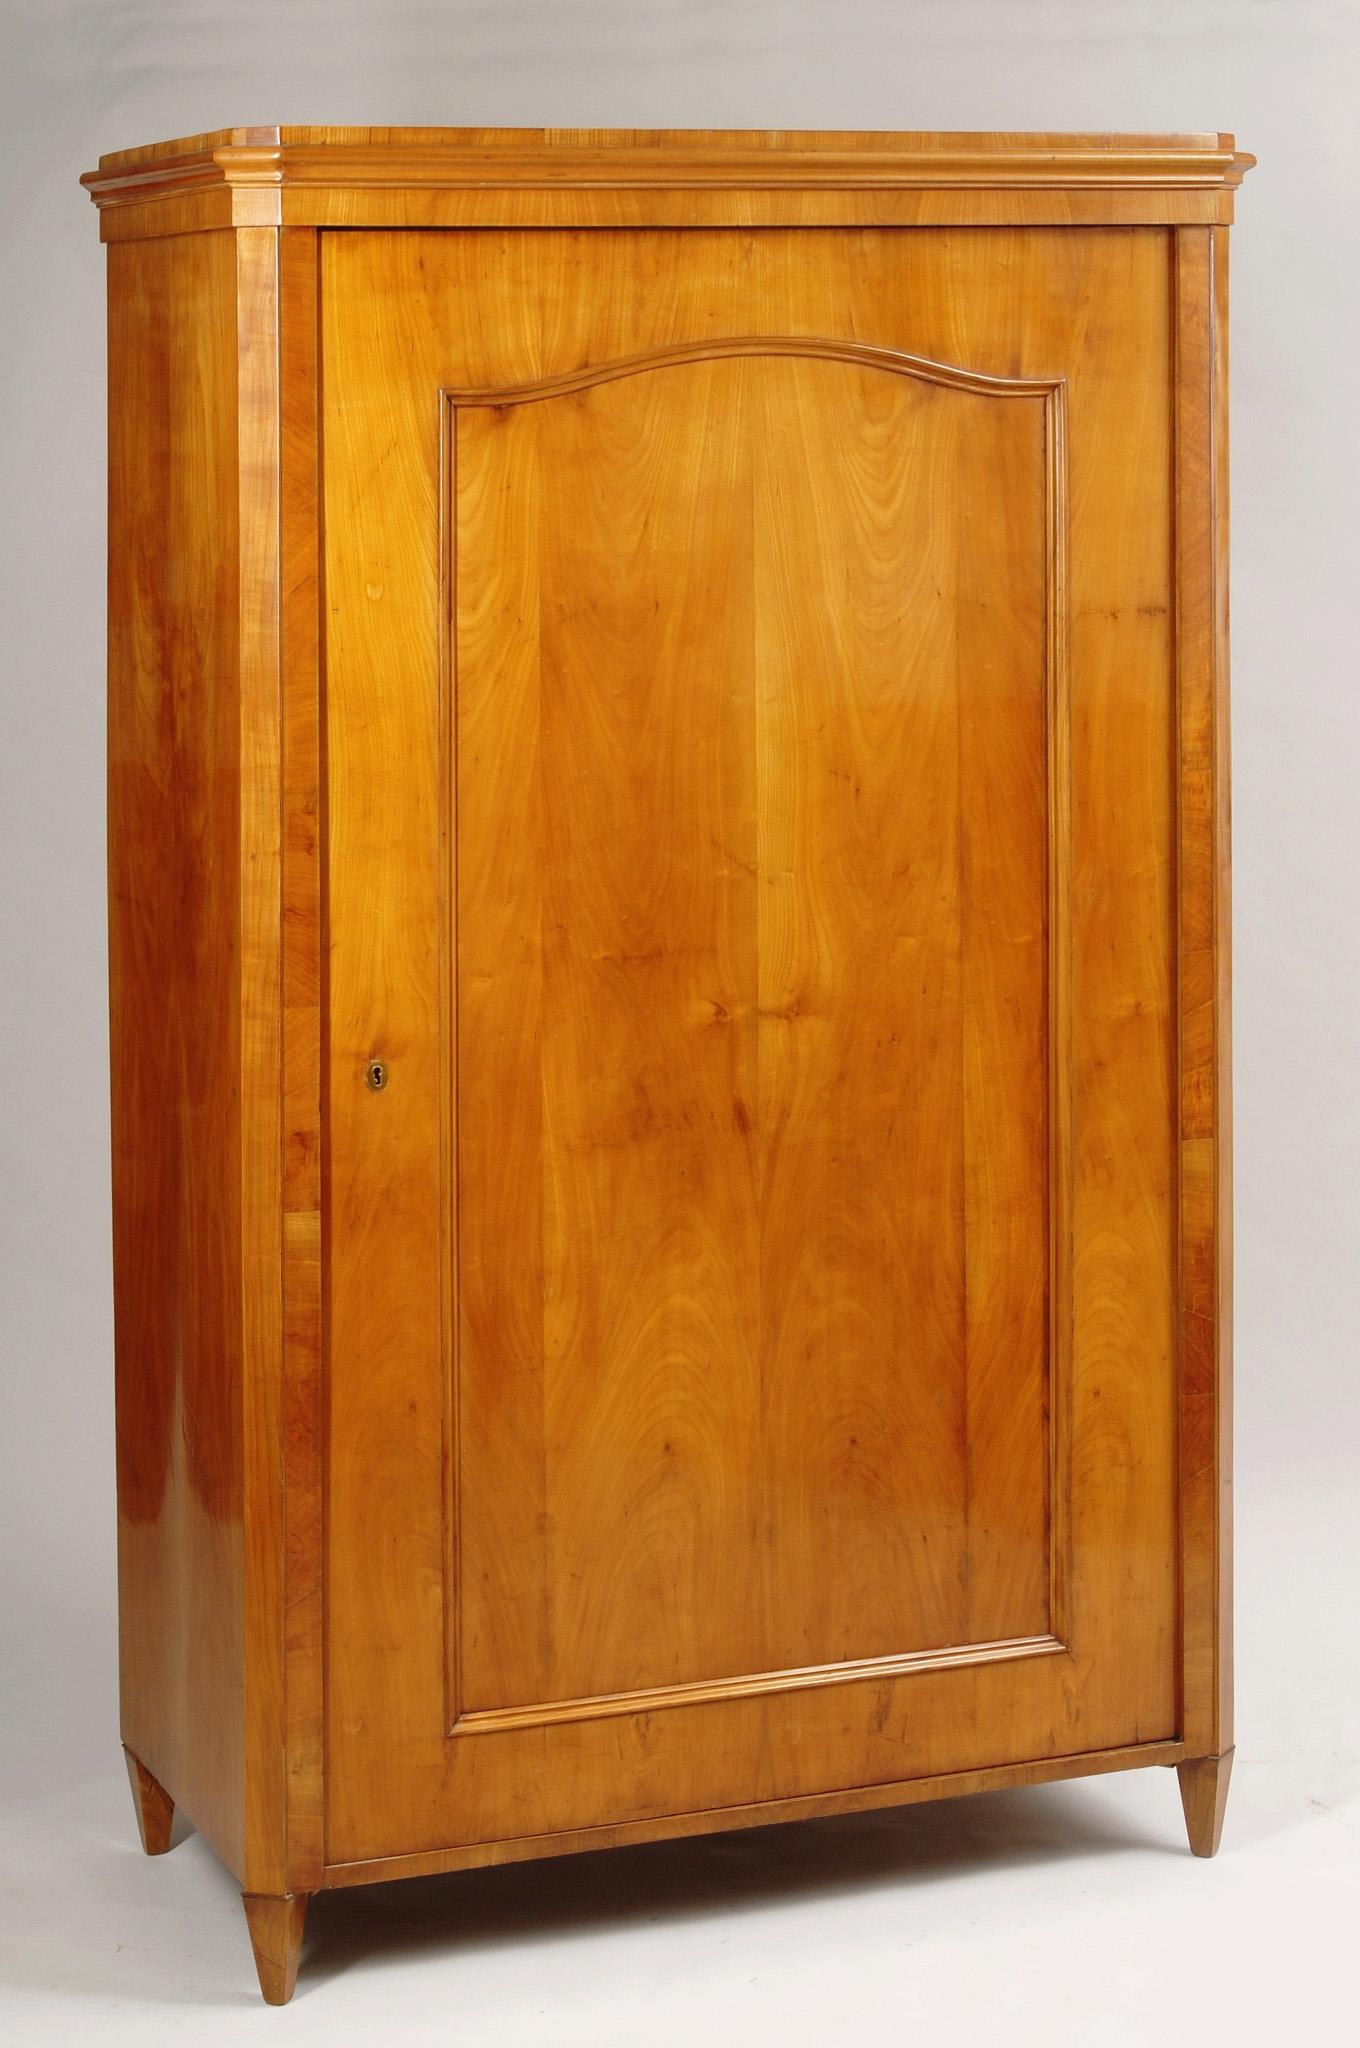 Completely restored Czech one door Biedermeier cabinets.
Source: Bohemia (Czechia)
Period: 1840-1849
Material: Cherry tree.